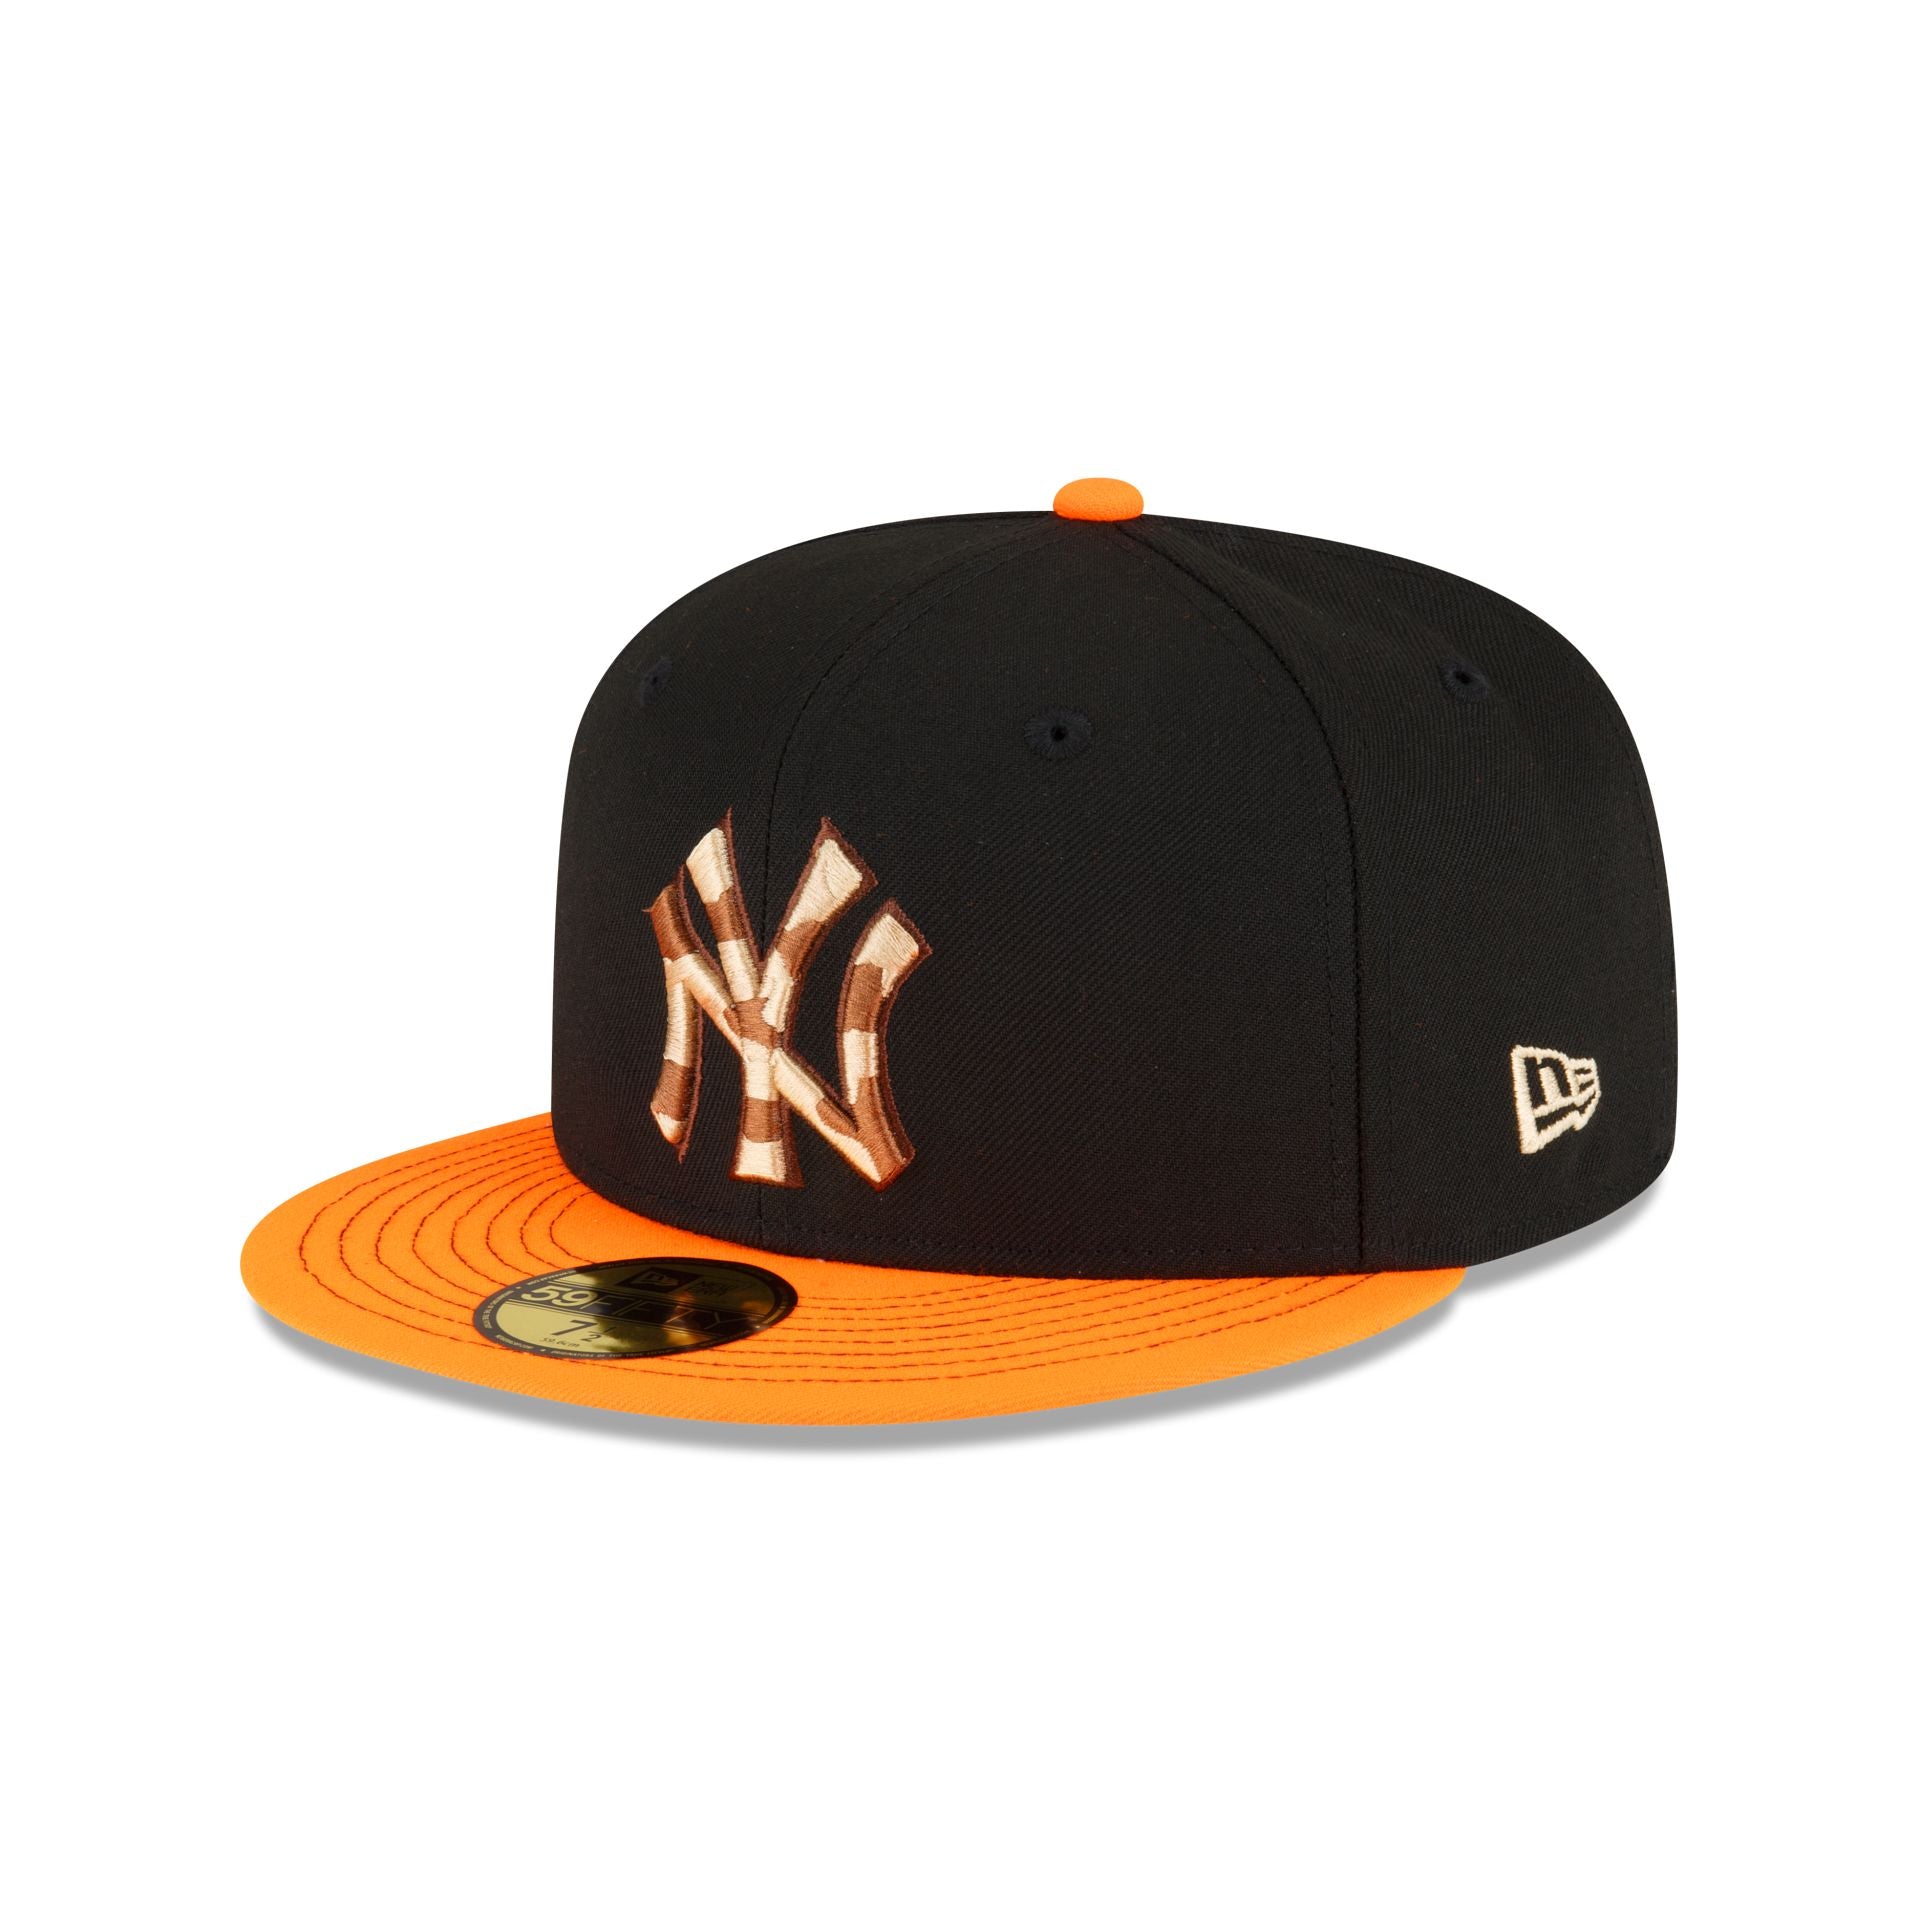 Visor – New Cap Orange Yankees York Era Hat Caps 59FIFTY Fitted Just New